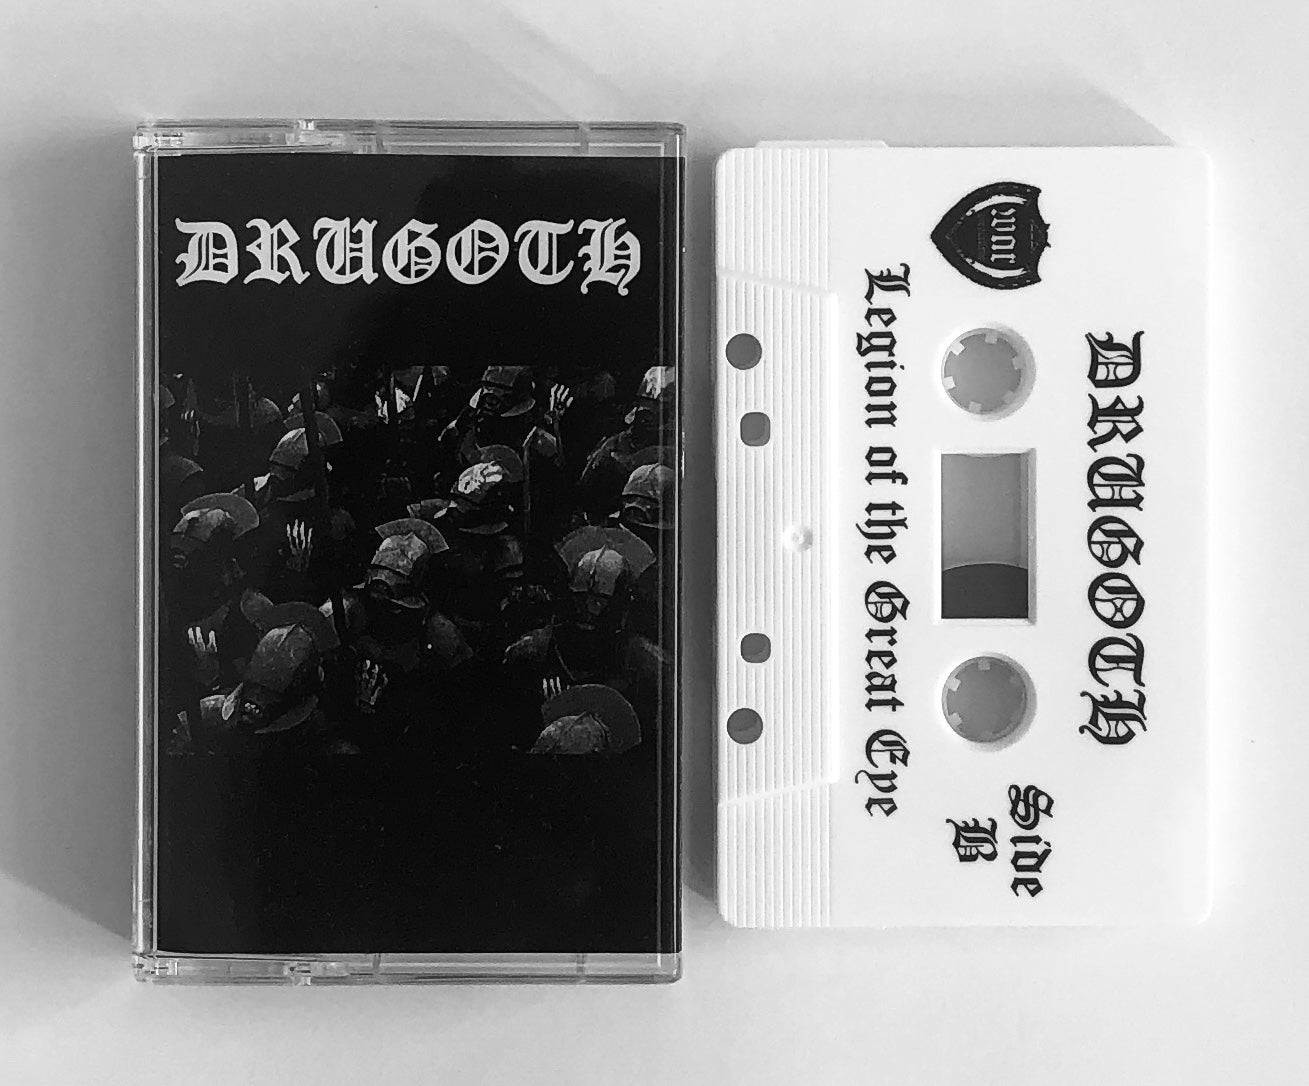 Drugoth (Oz) "Legion of the Great Eye" - Pro Tape